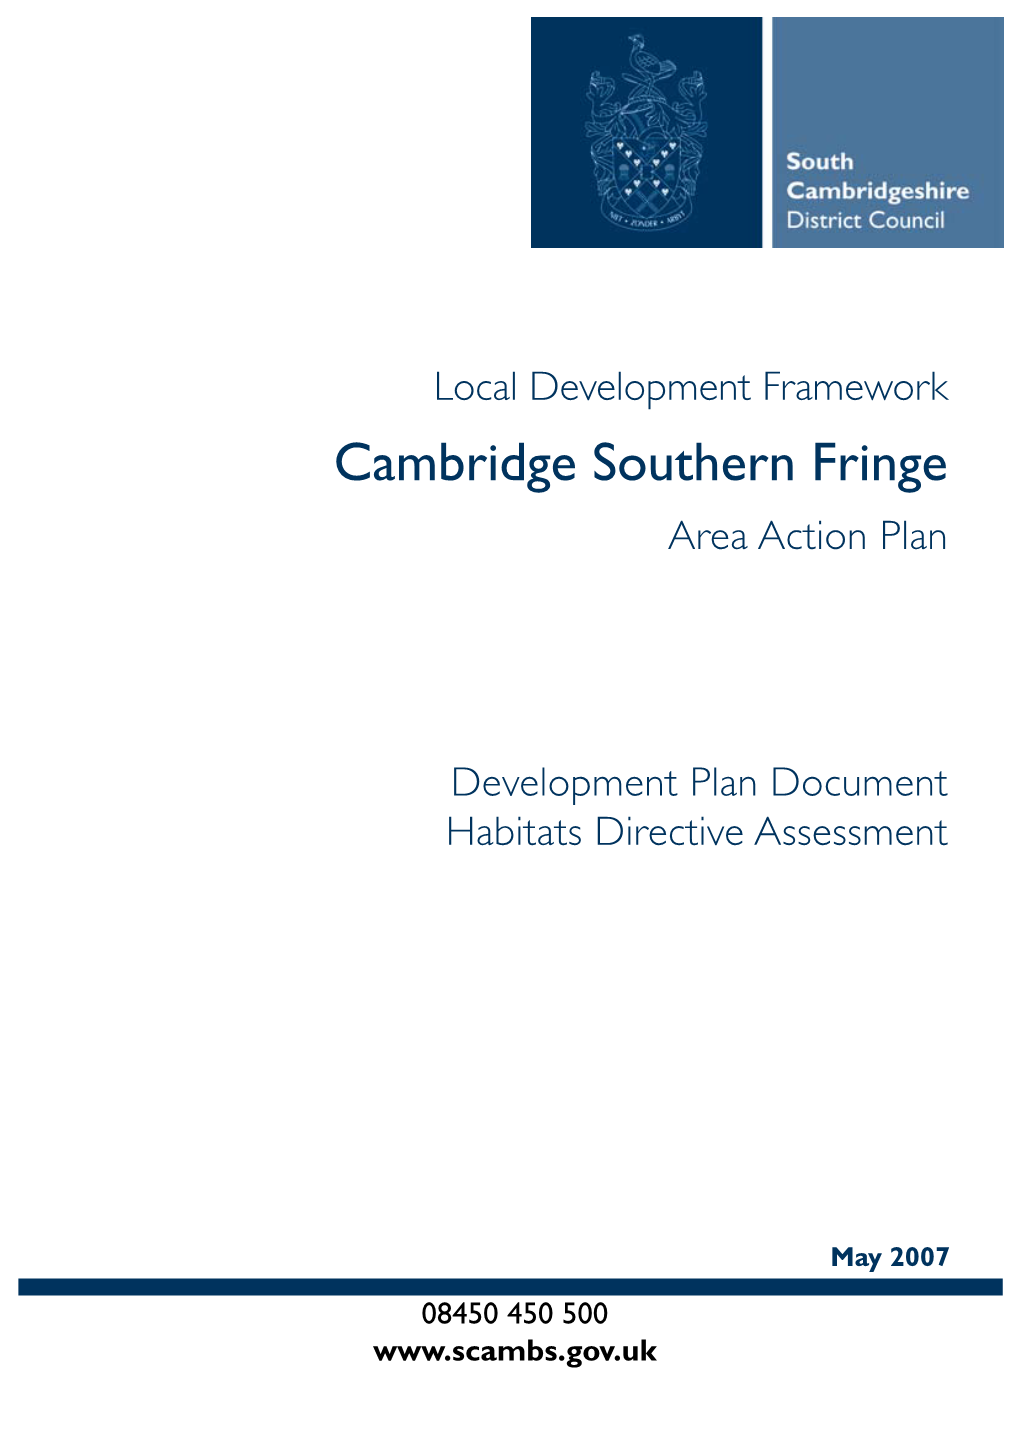 Cambridge Southern Fringe AAP Habitats Directive Assessment